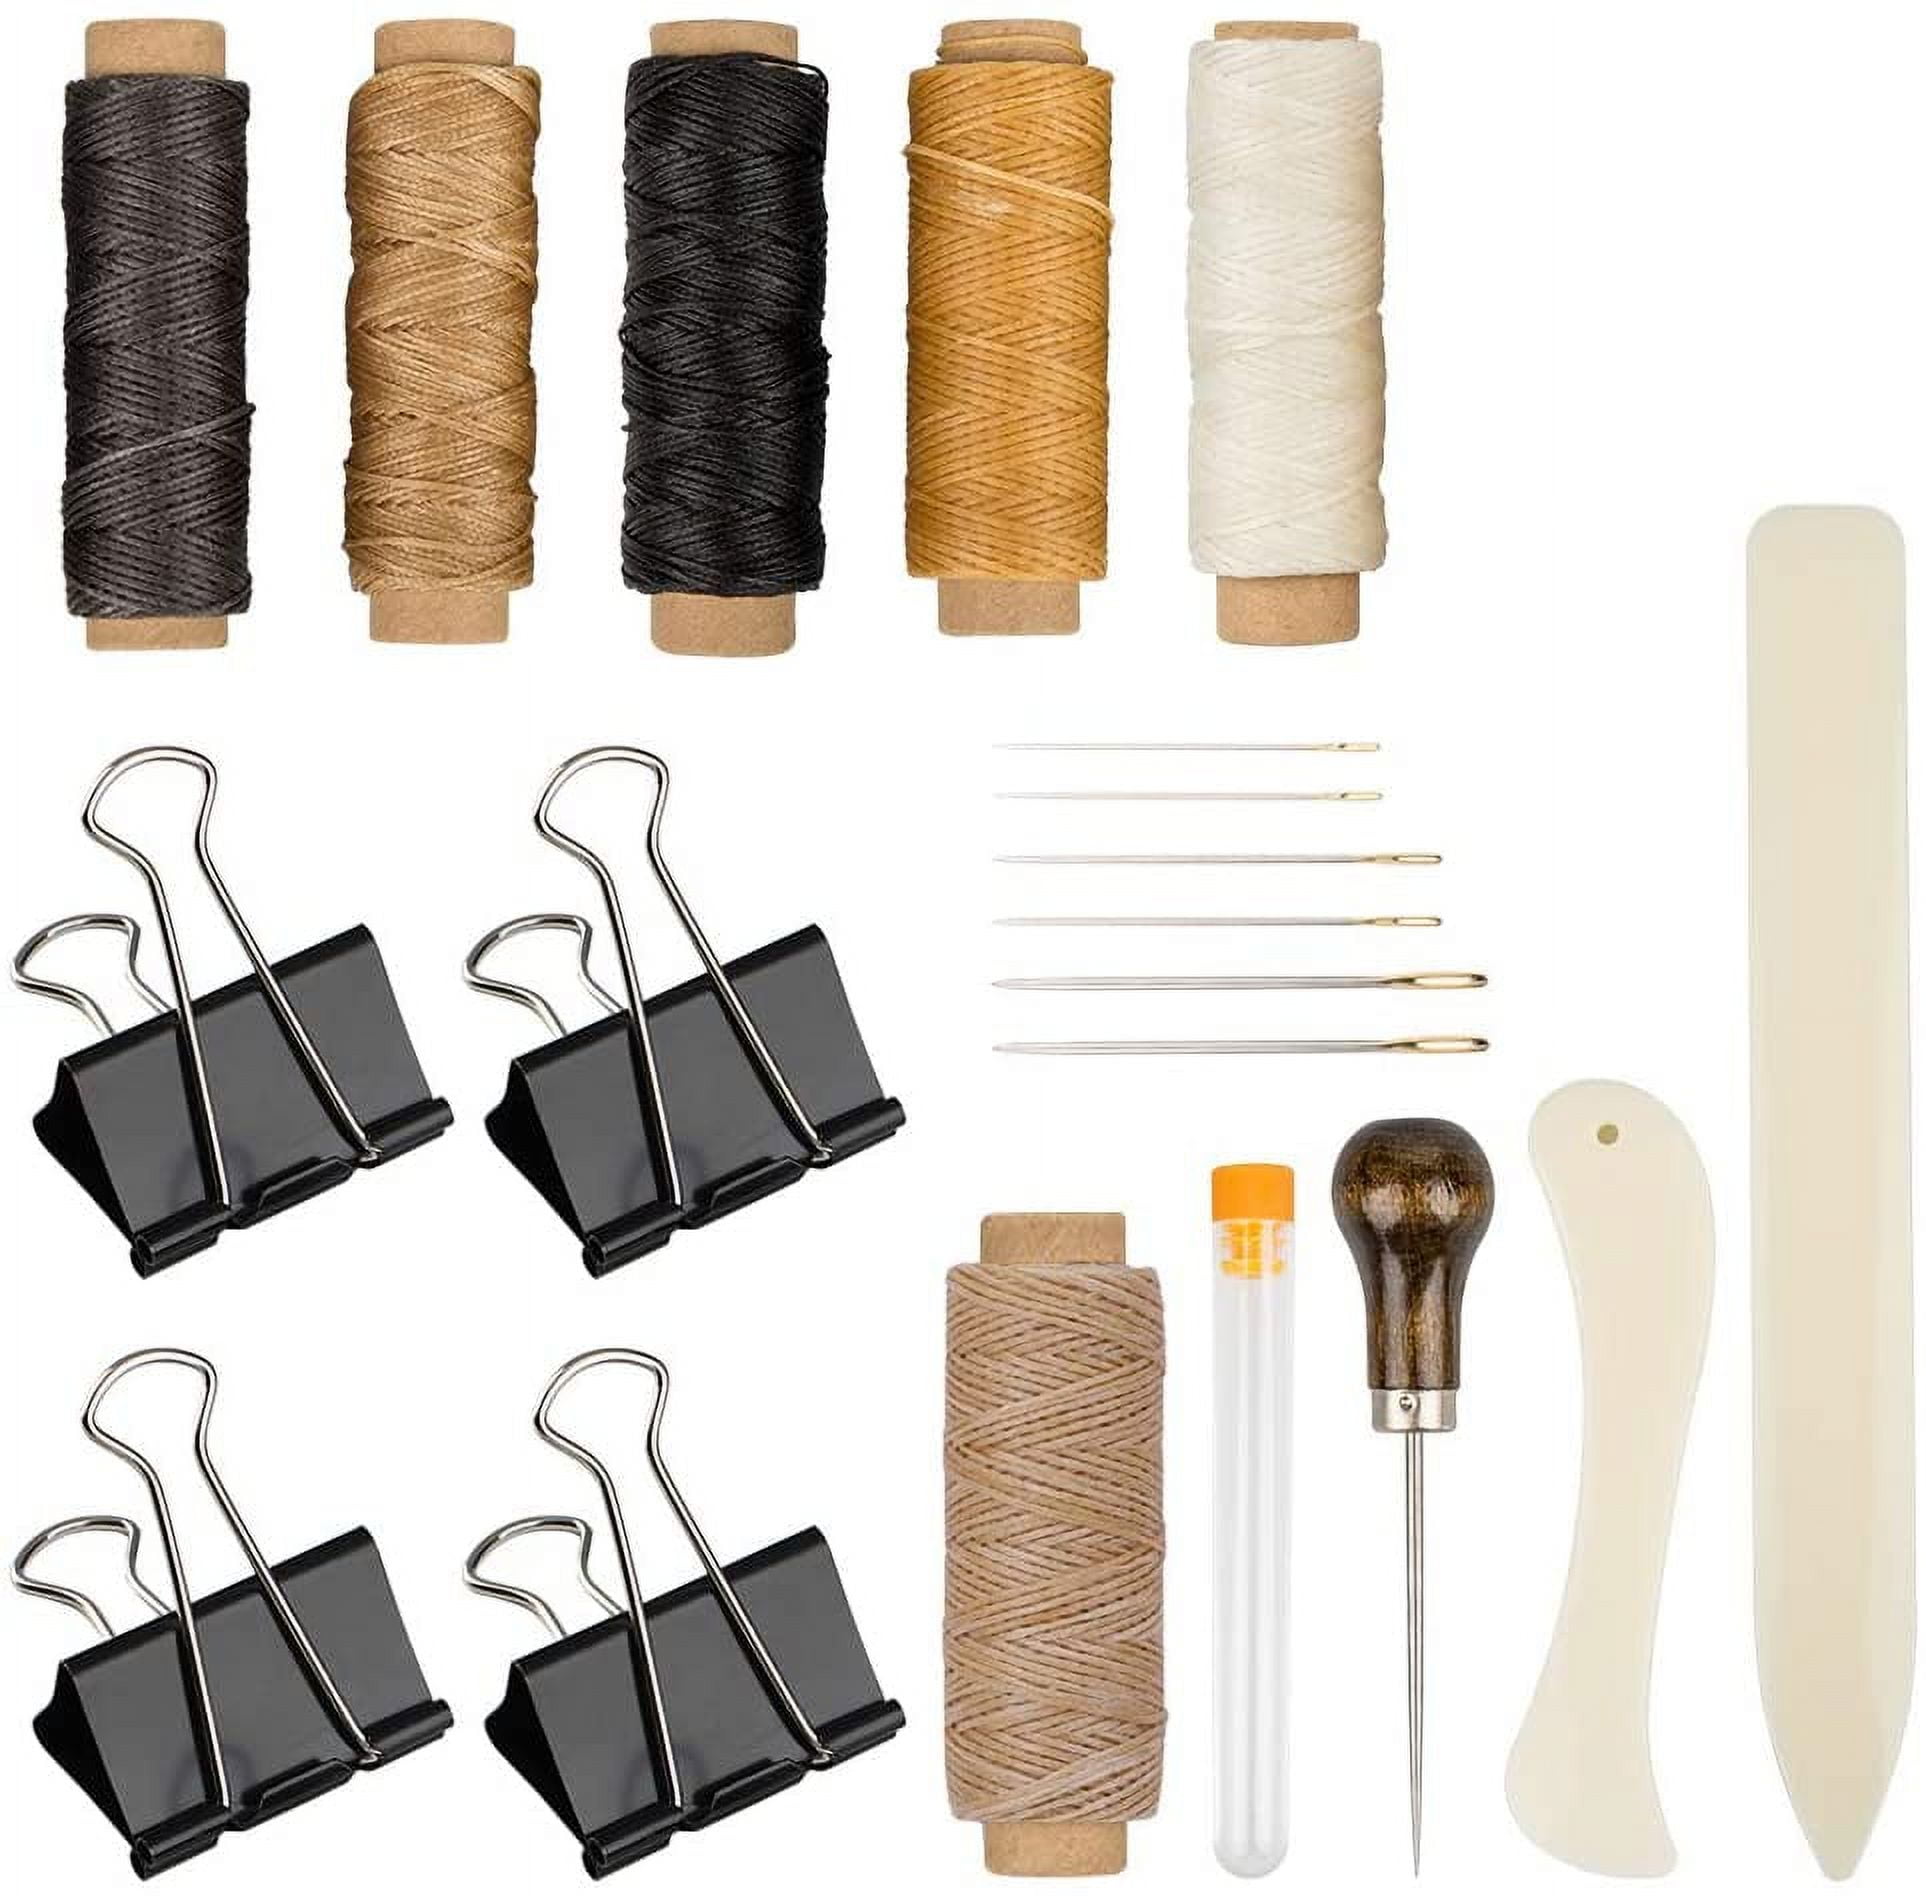 Set of 20 Bookbinding Tools, DaKuan Bone Folder Creaser Waxed Linen Thread  Wood Handle Awl Large-eye Needles Binder Clips for Handmade DIY Bookbinding  Crafts and Sewing Supplies 